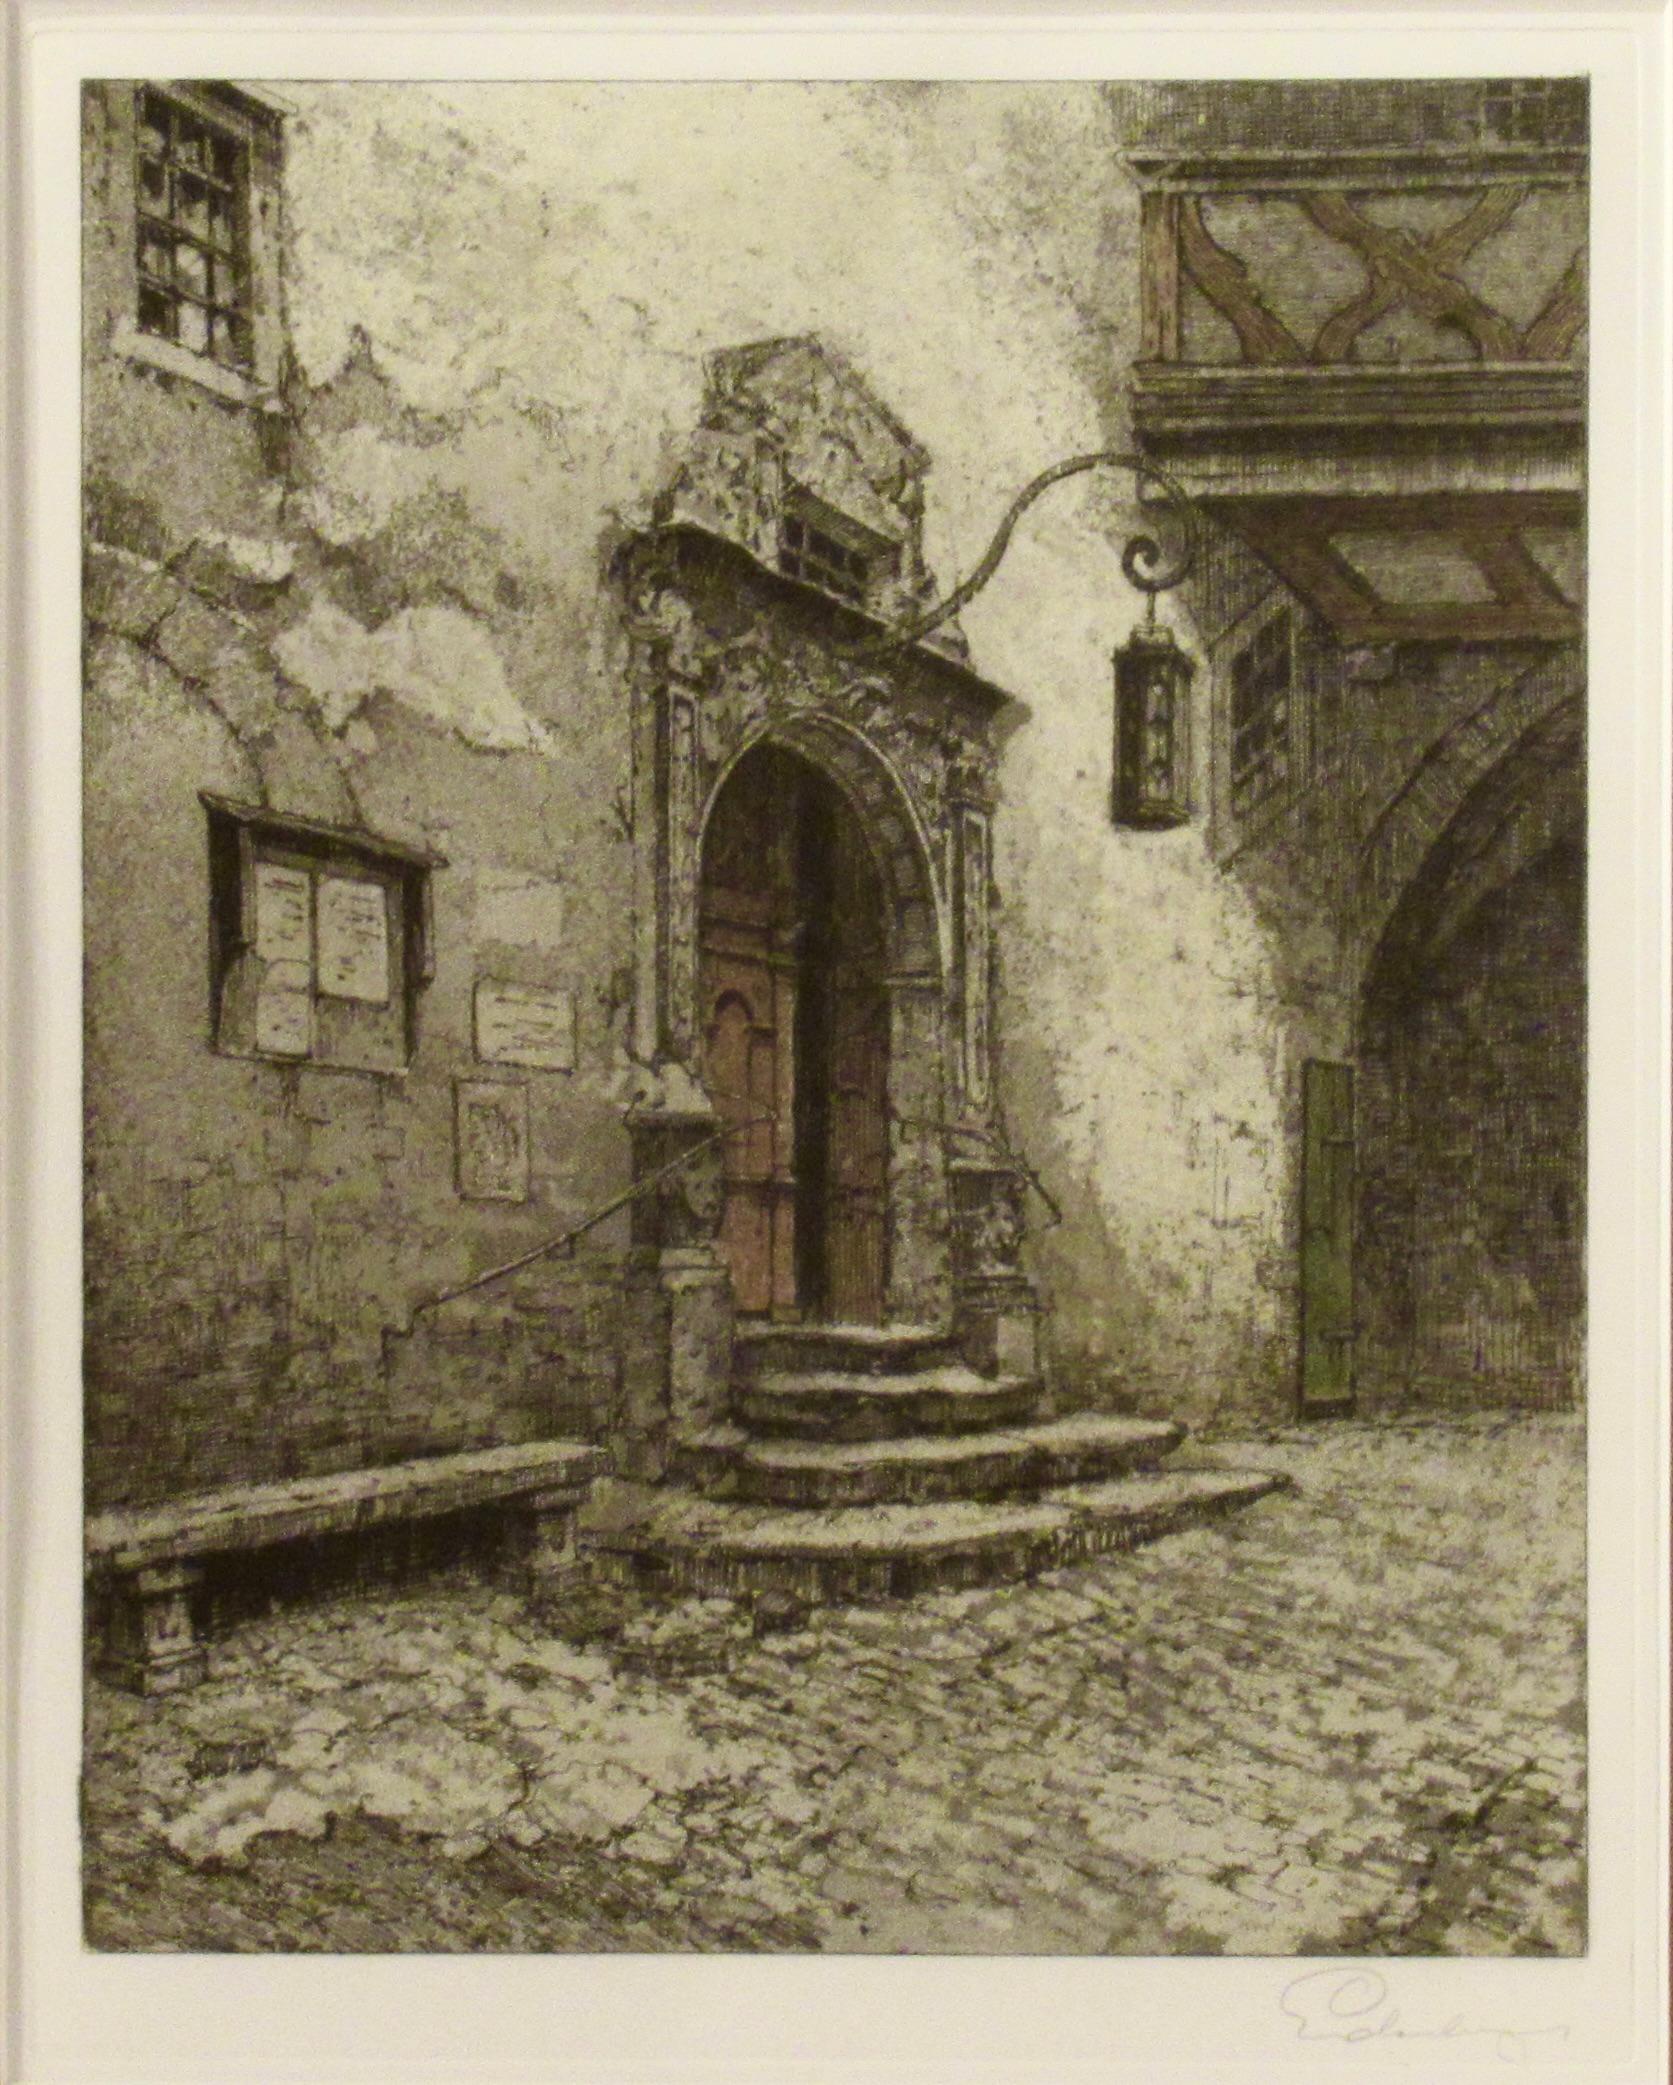 Rothenburg, City Hall Gate - Print by Josef Eidenberger